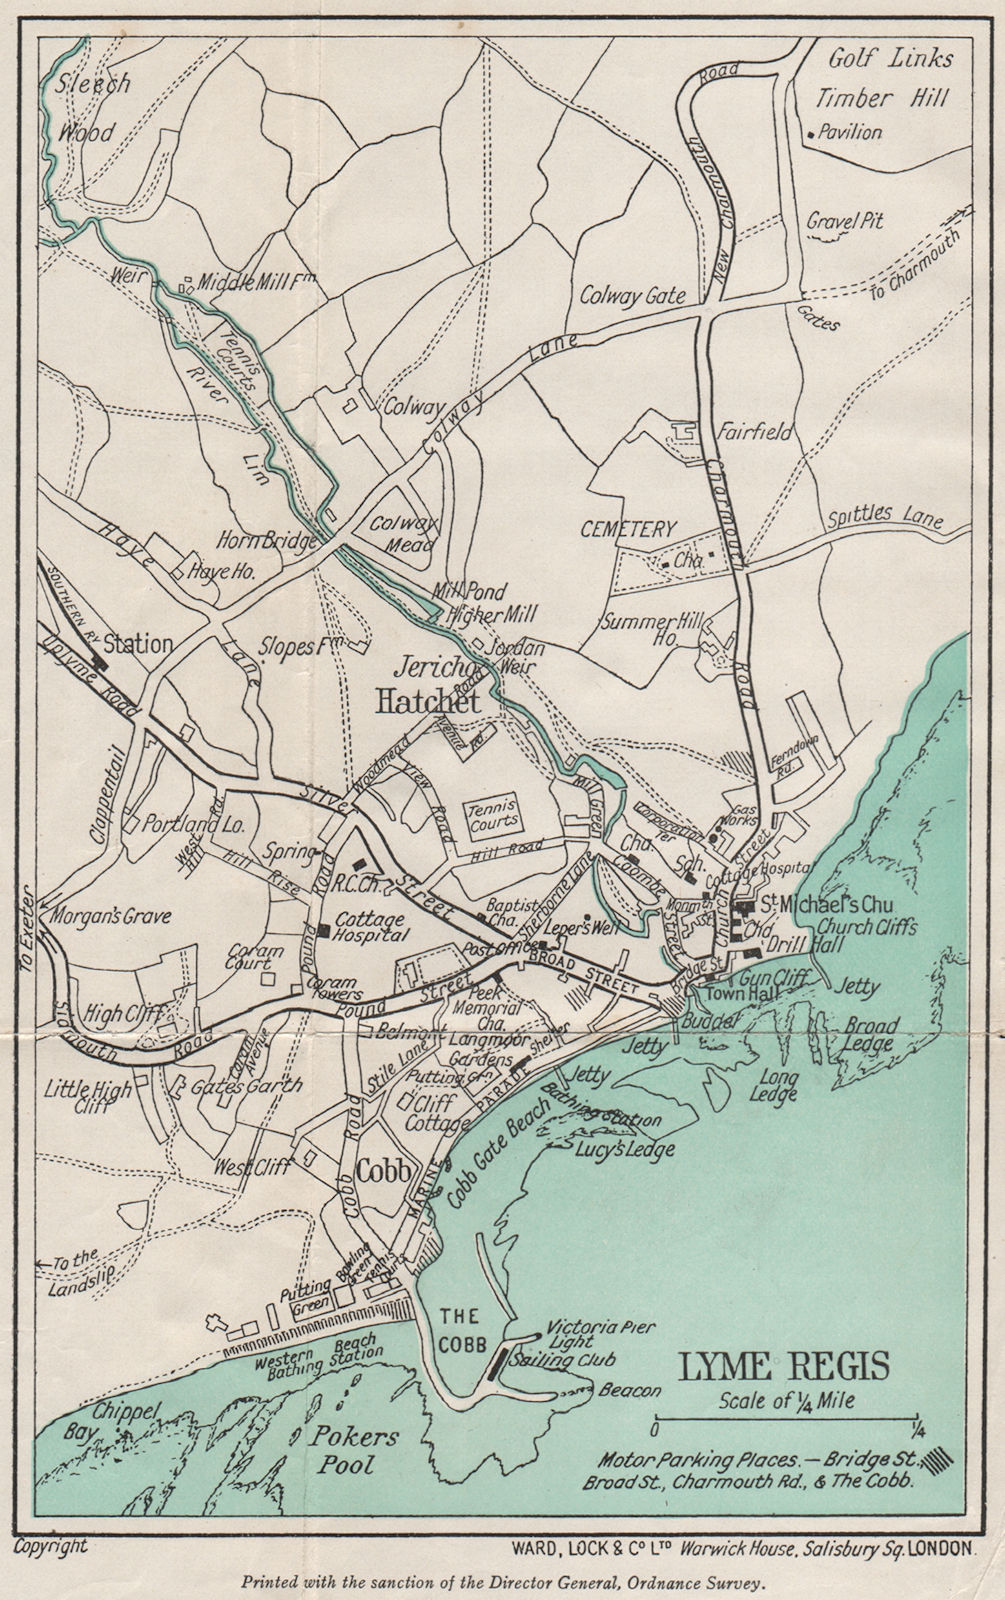 Associate Product LYME REGIS vintage town/city plan. Dorset. WARD LOCK 1938 old vintage map